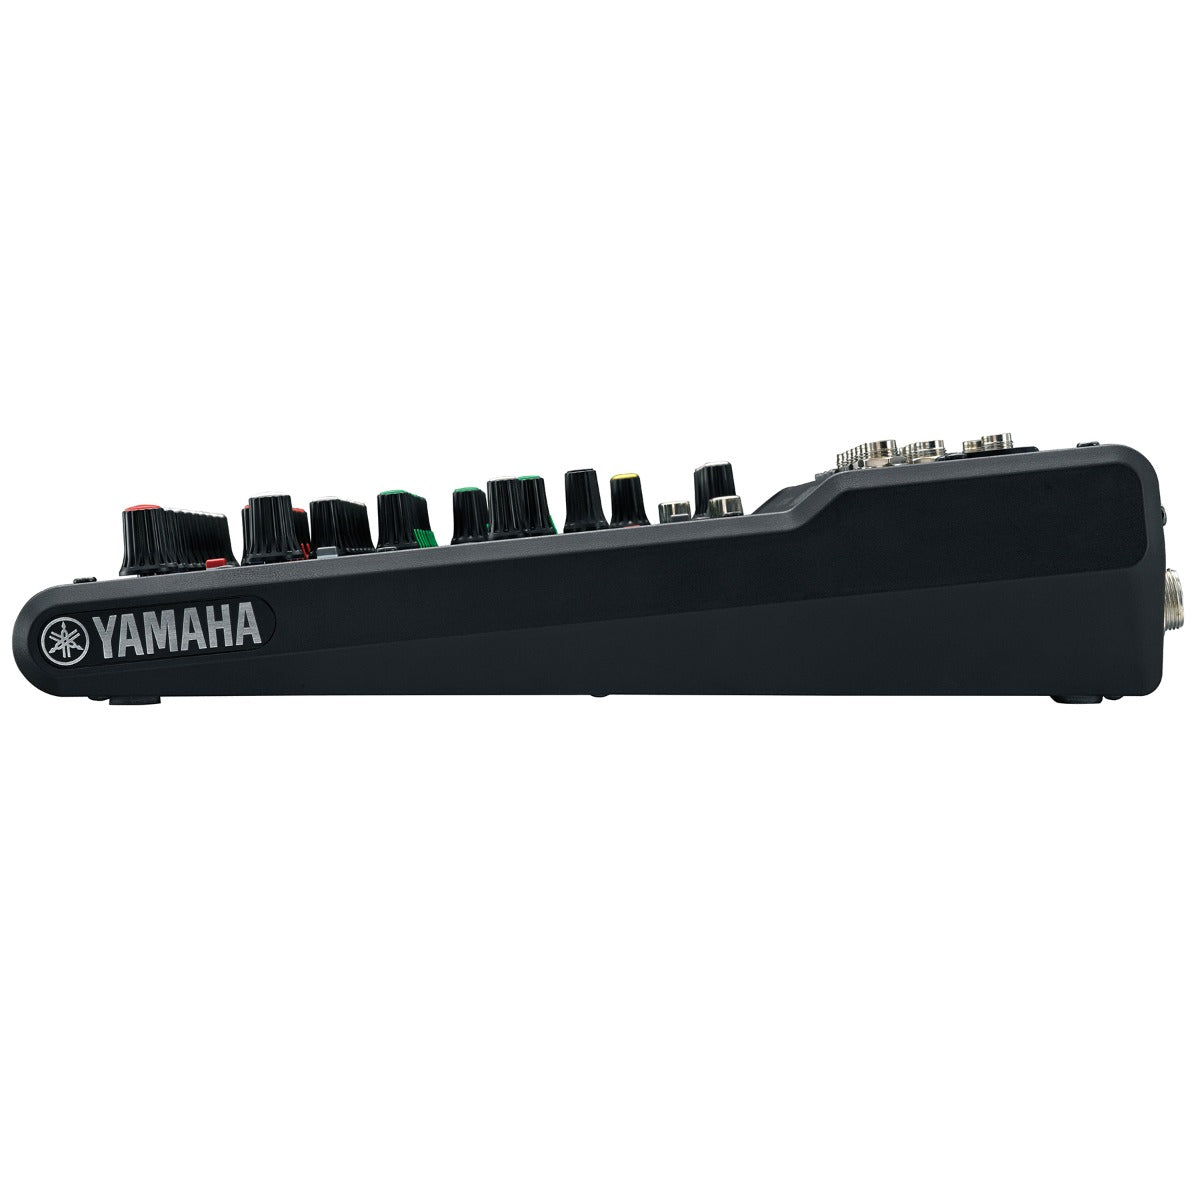 Yamaha MG10XU 10-Channel Compact Stereo Mixer and USB Audio Interface view 3